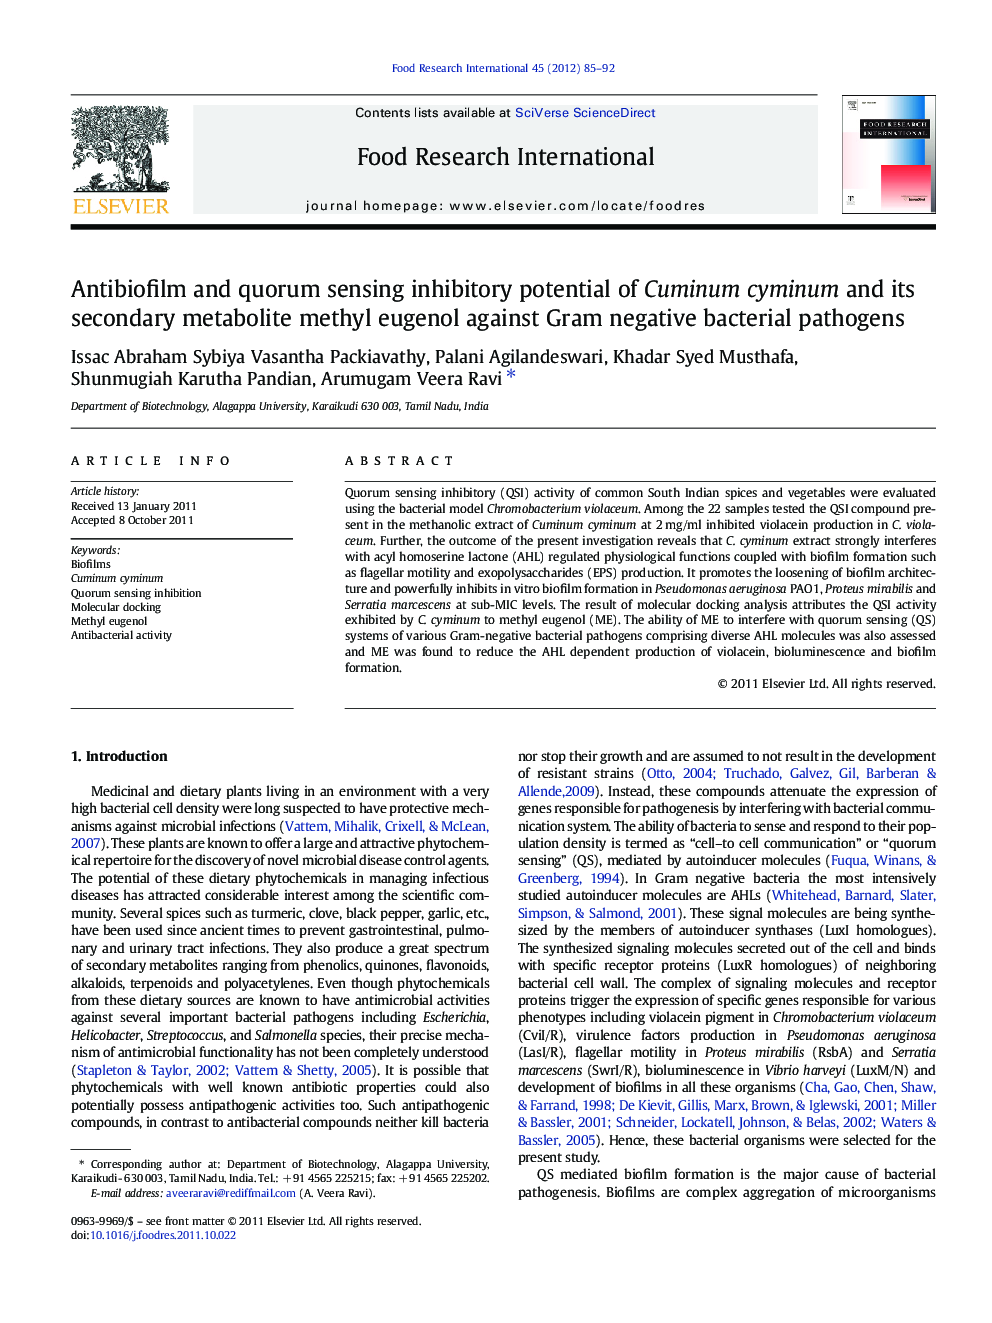 Antibiofilm and quorum sensing inhibitory potential of Cuminum cyminum and its secondary metabolite methyl eugenol against Gram negative bacterial pathogens